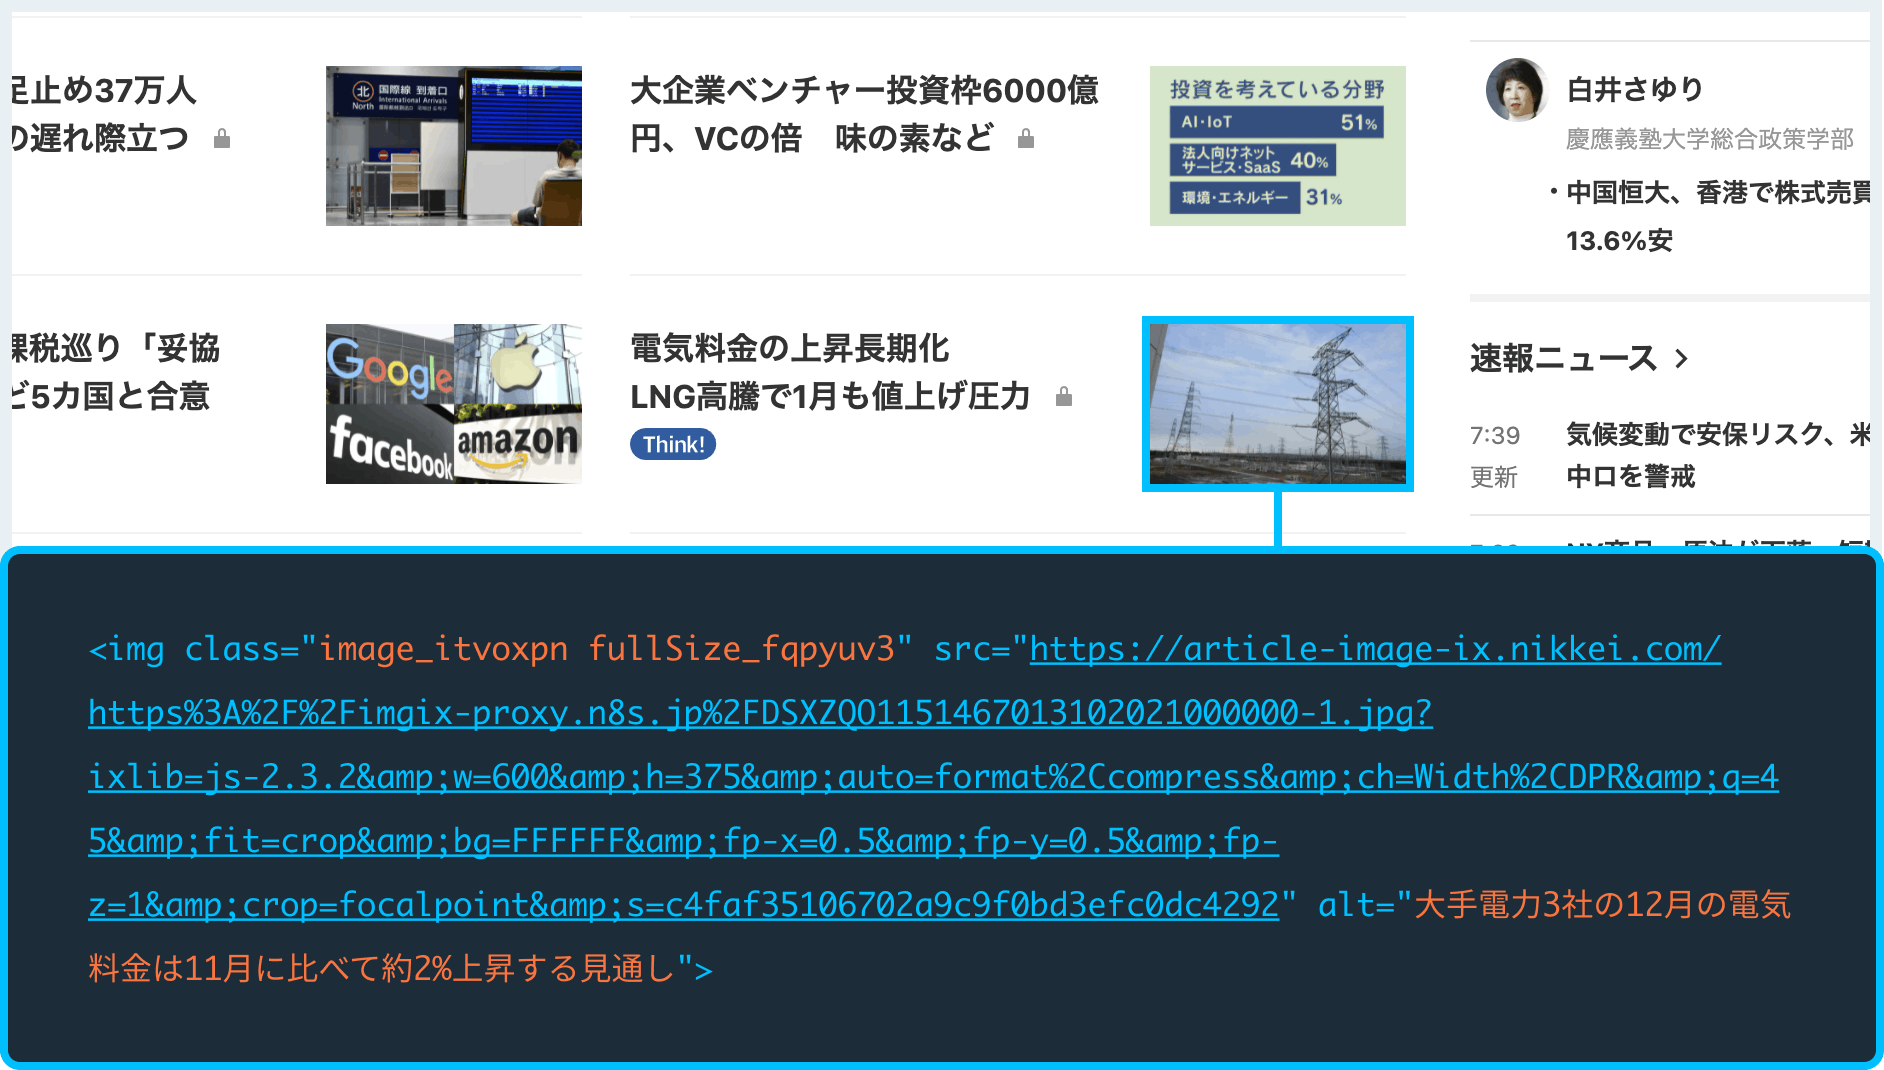 Nikkei code example